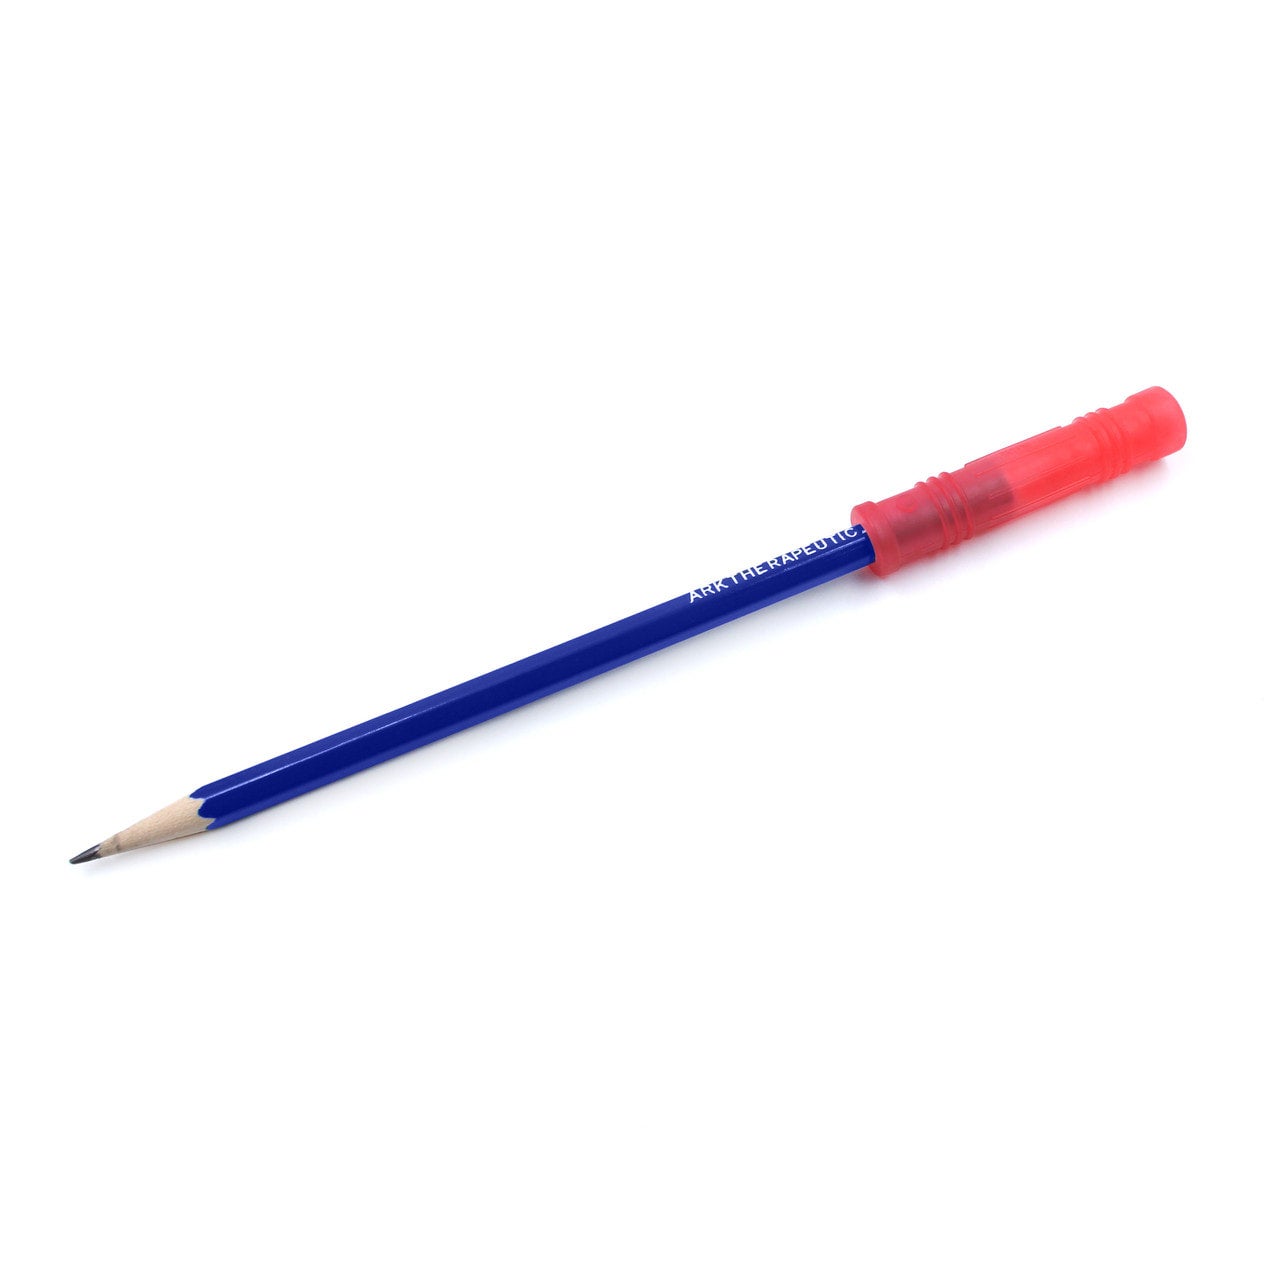 ARK Bite Saber Pencil Topper (with pencil)